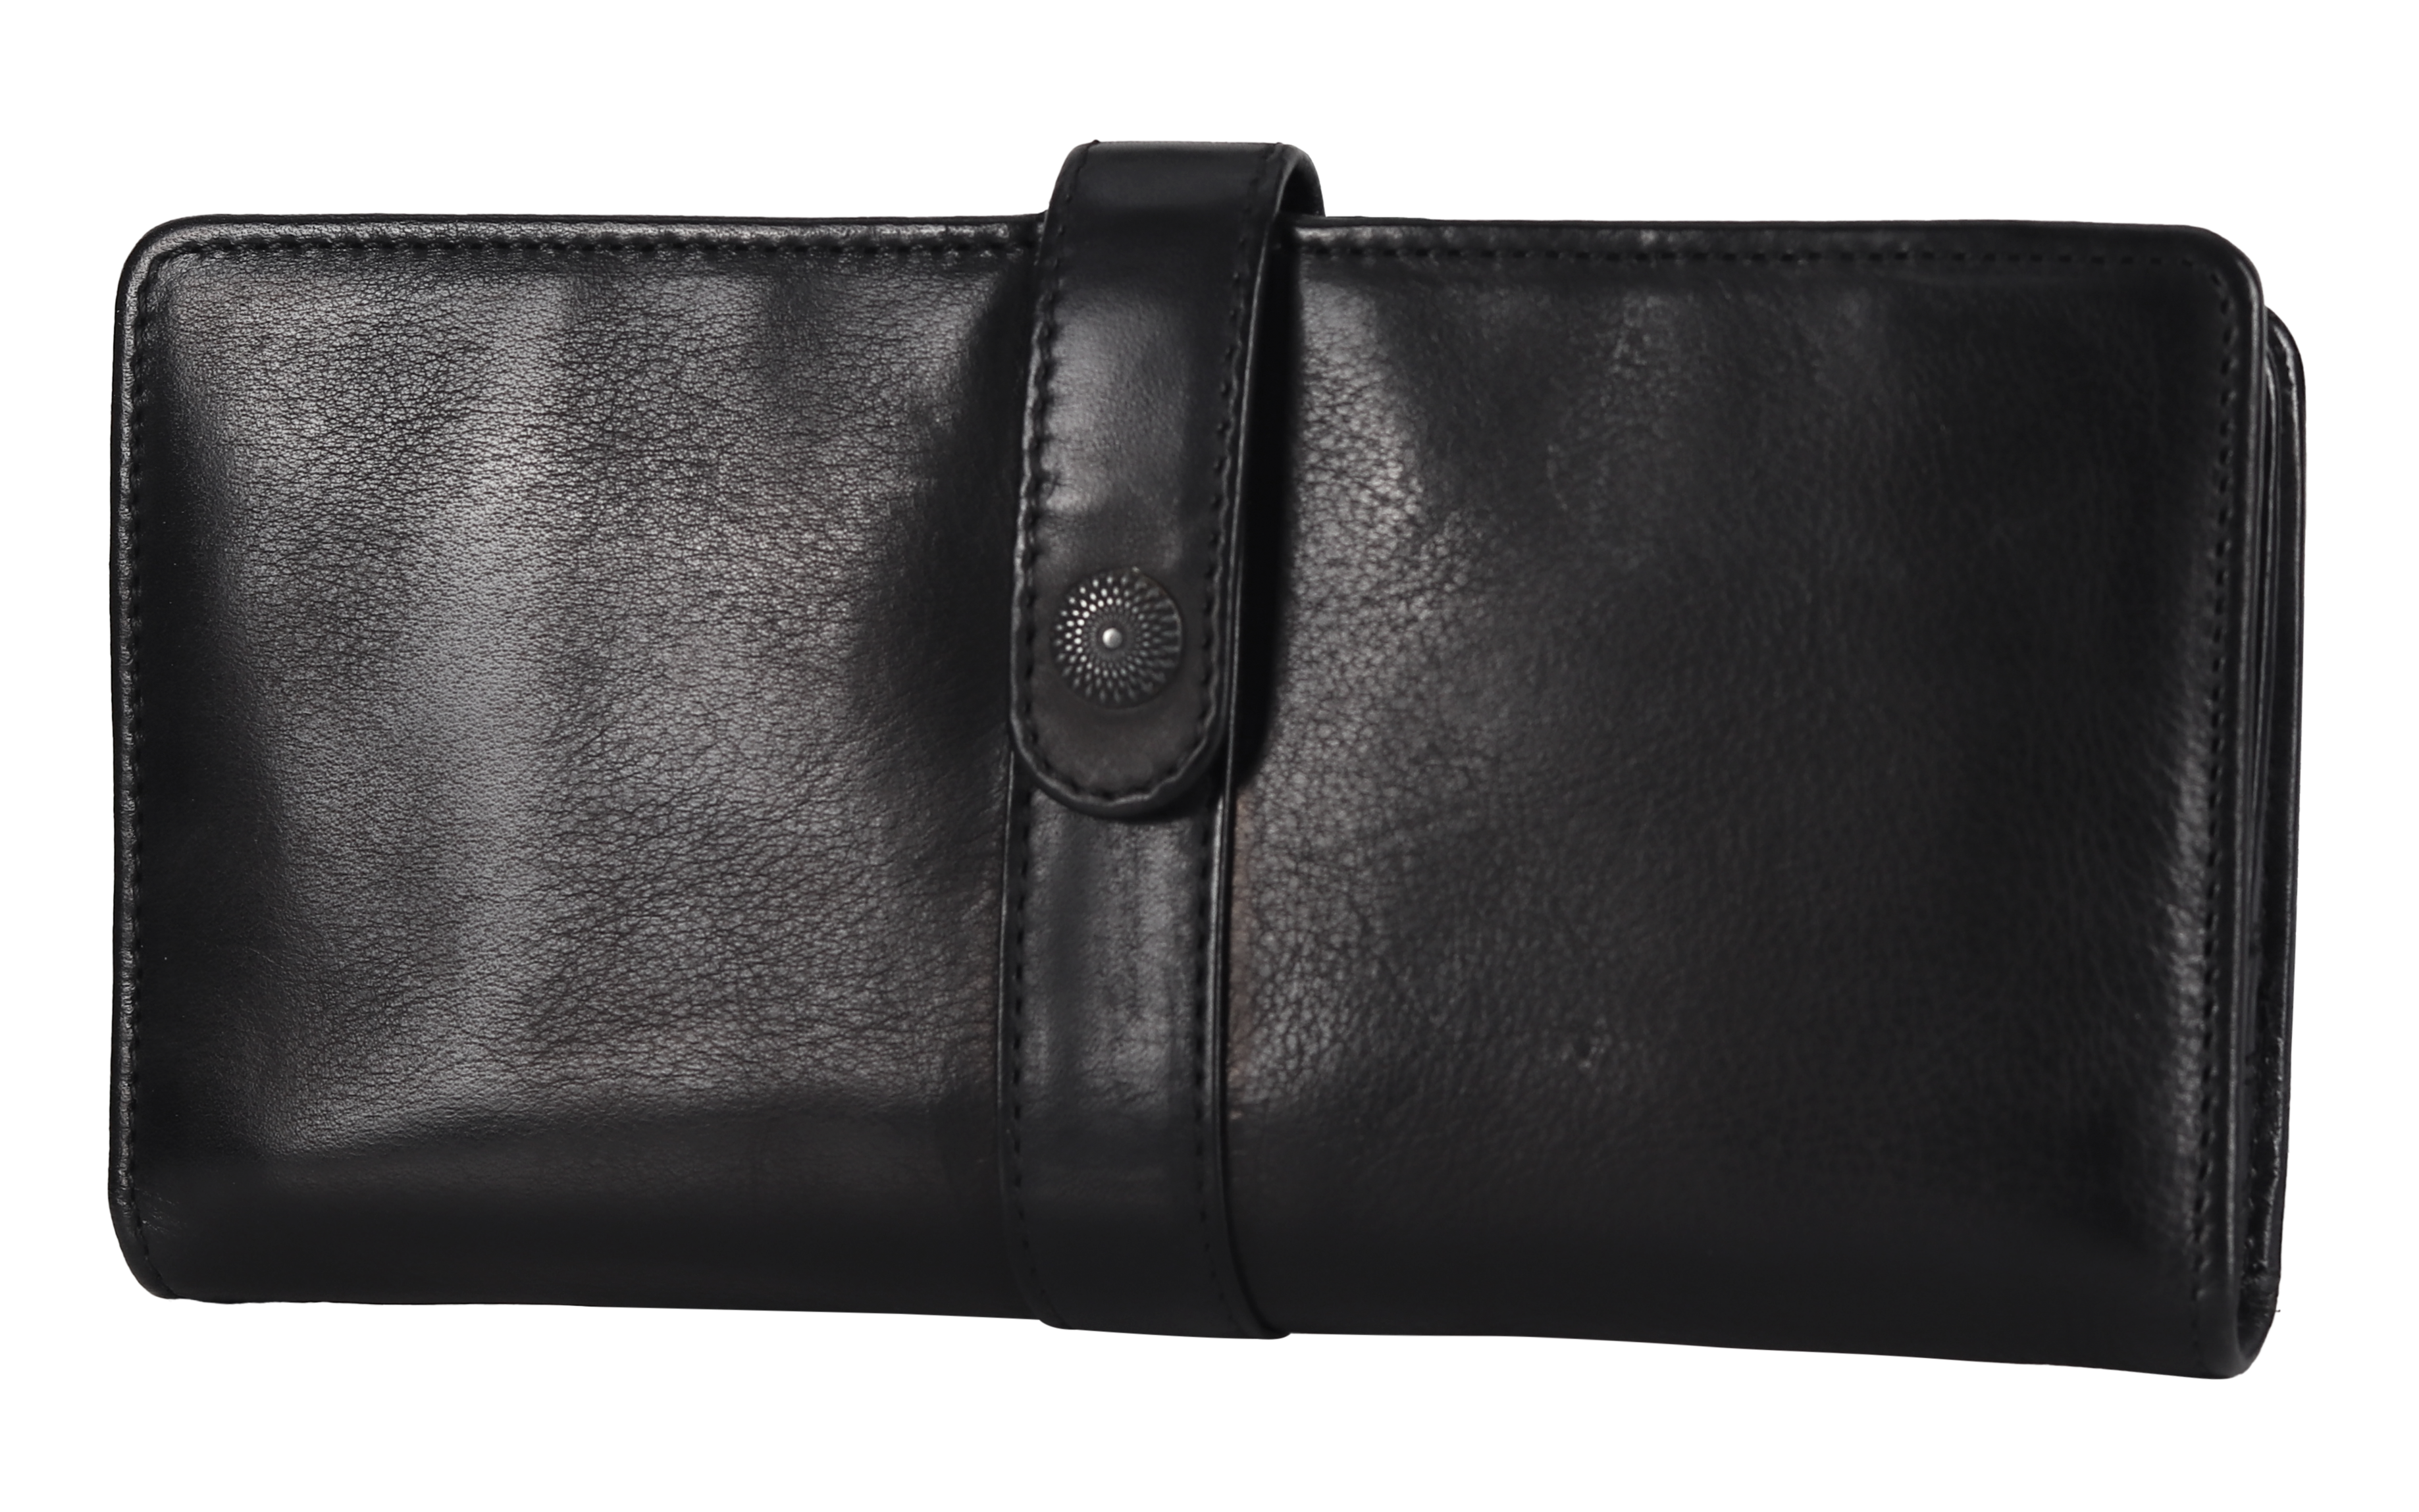 BOL Women's Snap Tab Leather Wallet